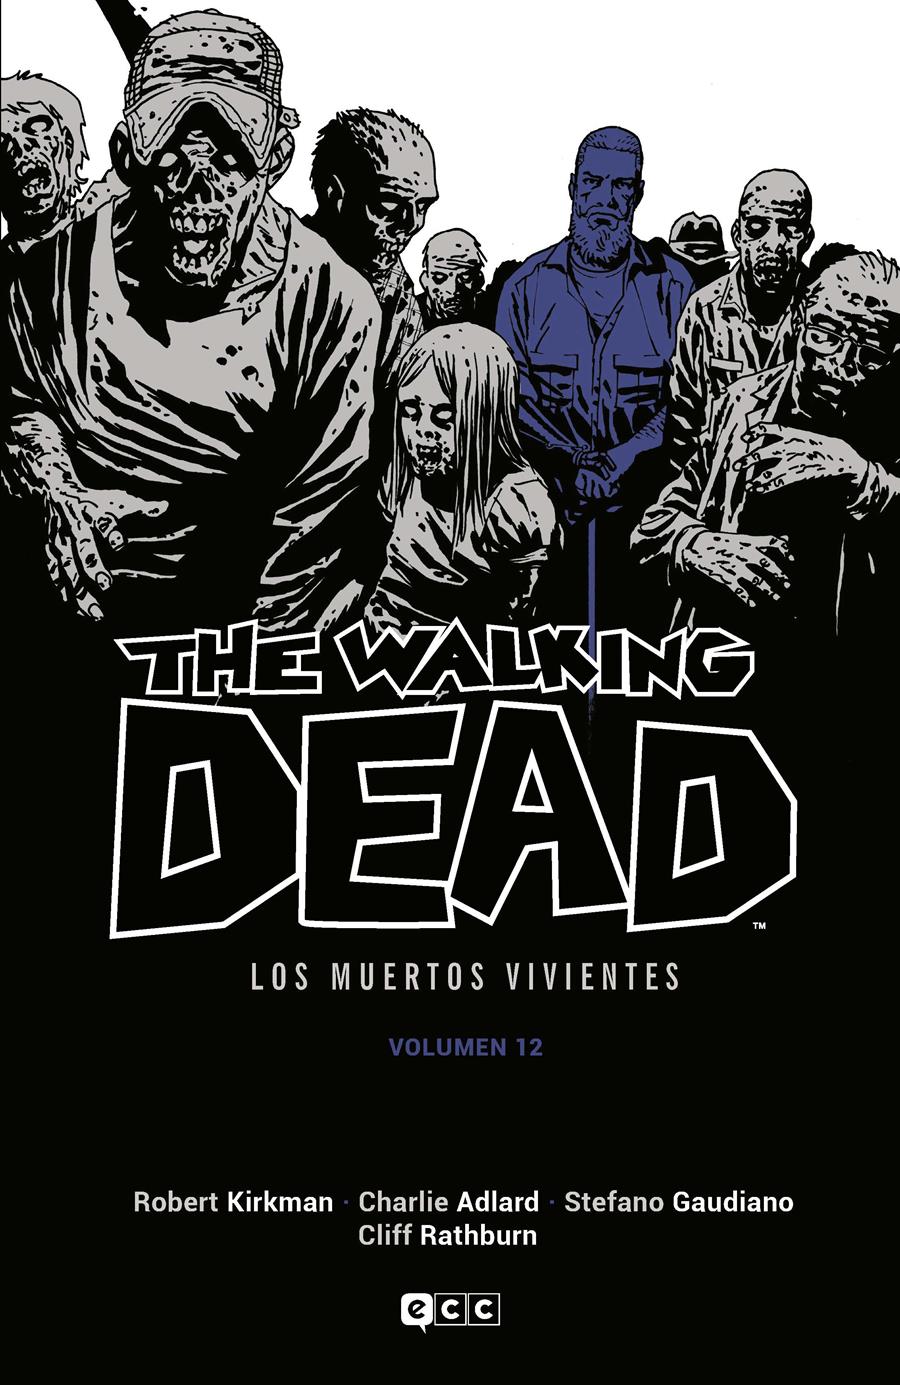 The Walking Dead (Los muertos vivientes) vol. 12 de 16 | N1122-ECC46 | Charlie Adlard / Robert Kirkman | Terra de Còmic - Tu tienda de cómics online especializada en cómics, manga y merchandising